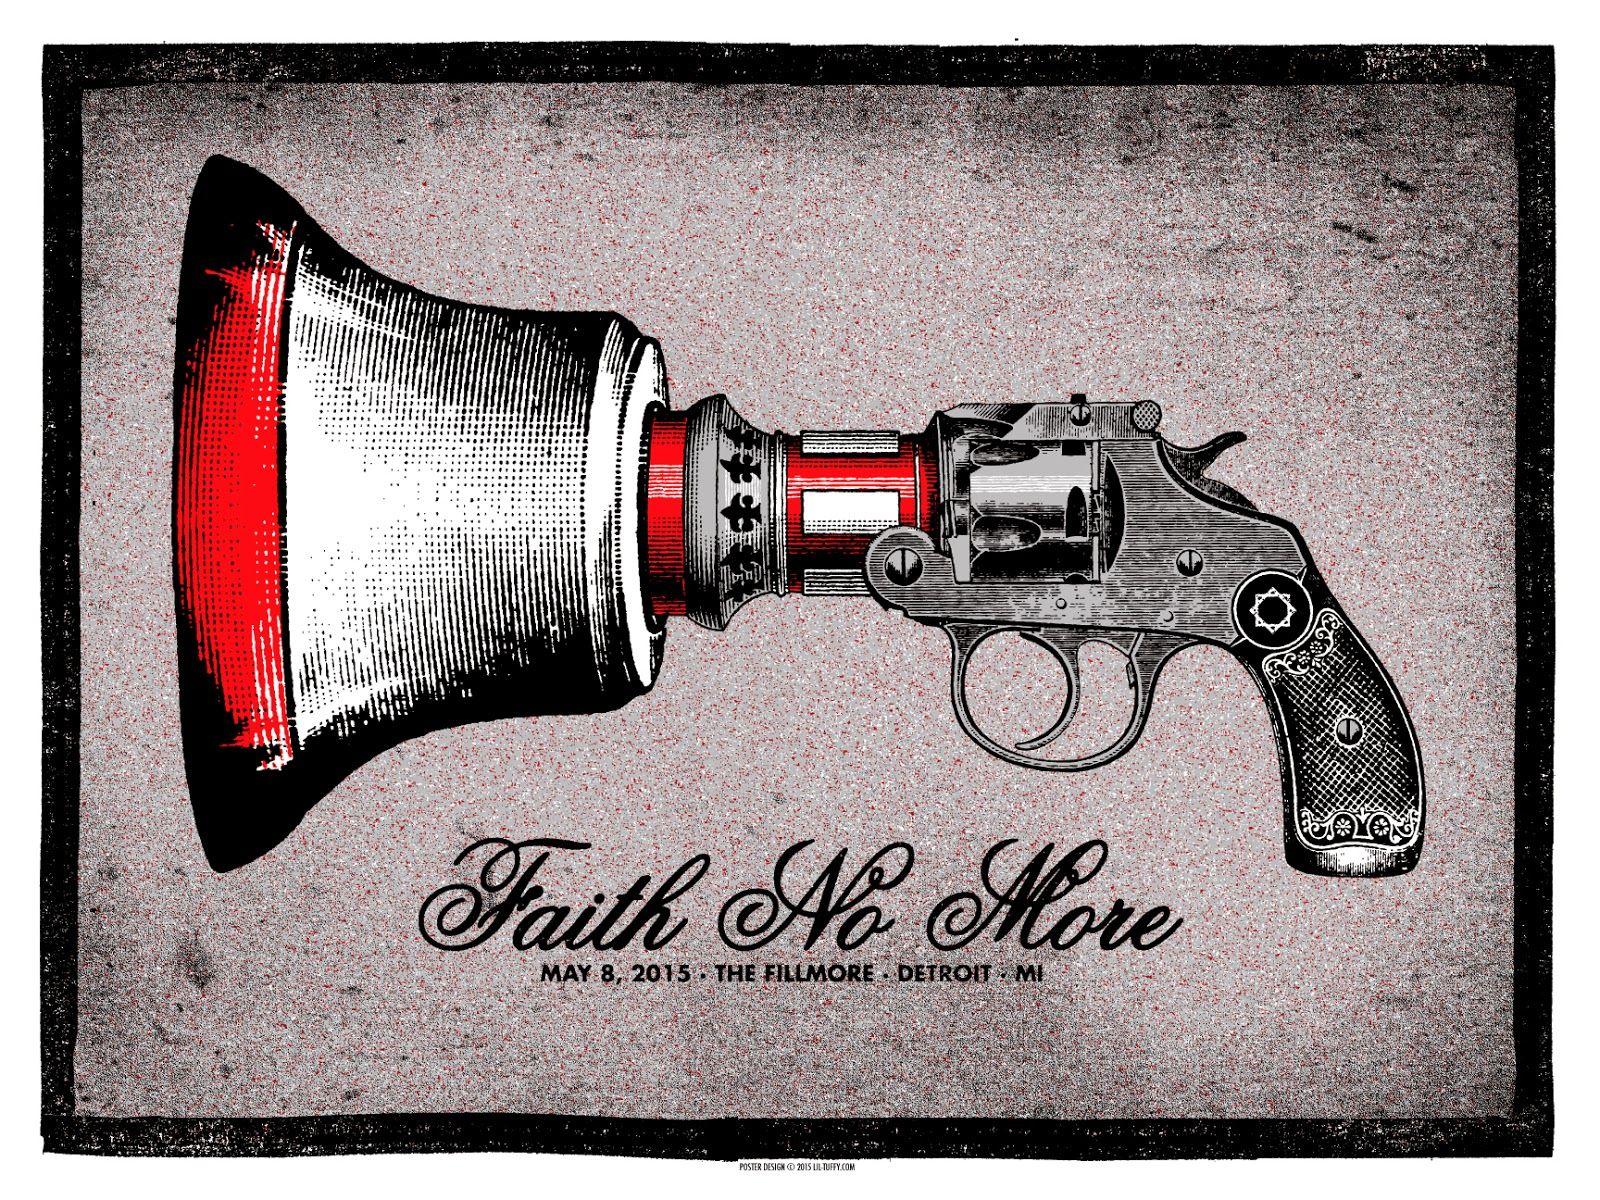 INSIDE THE ROCK POSTER FRAME BLOG: Faith No More Detroit Poster